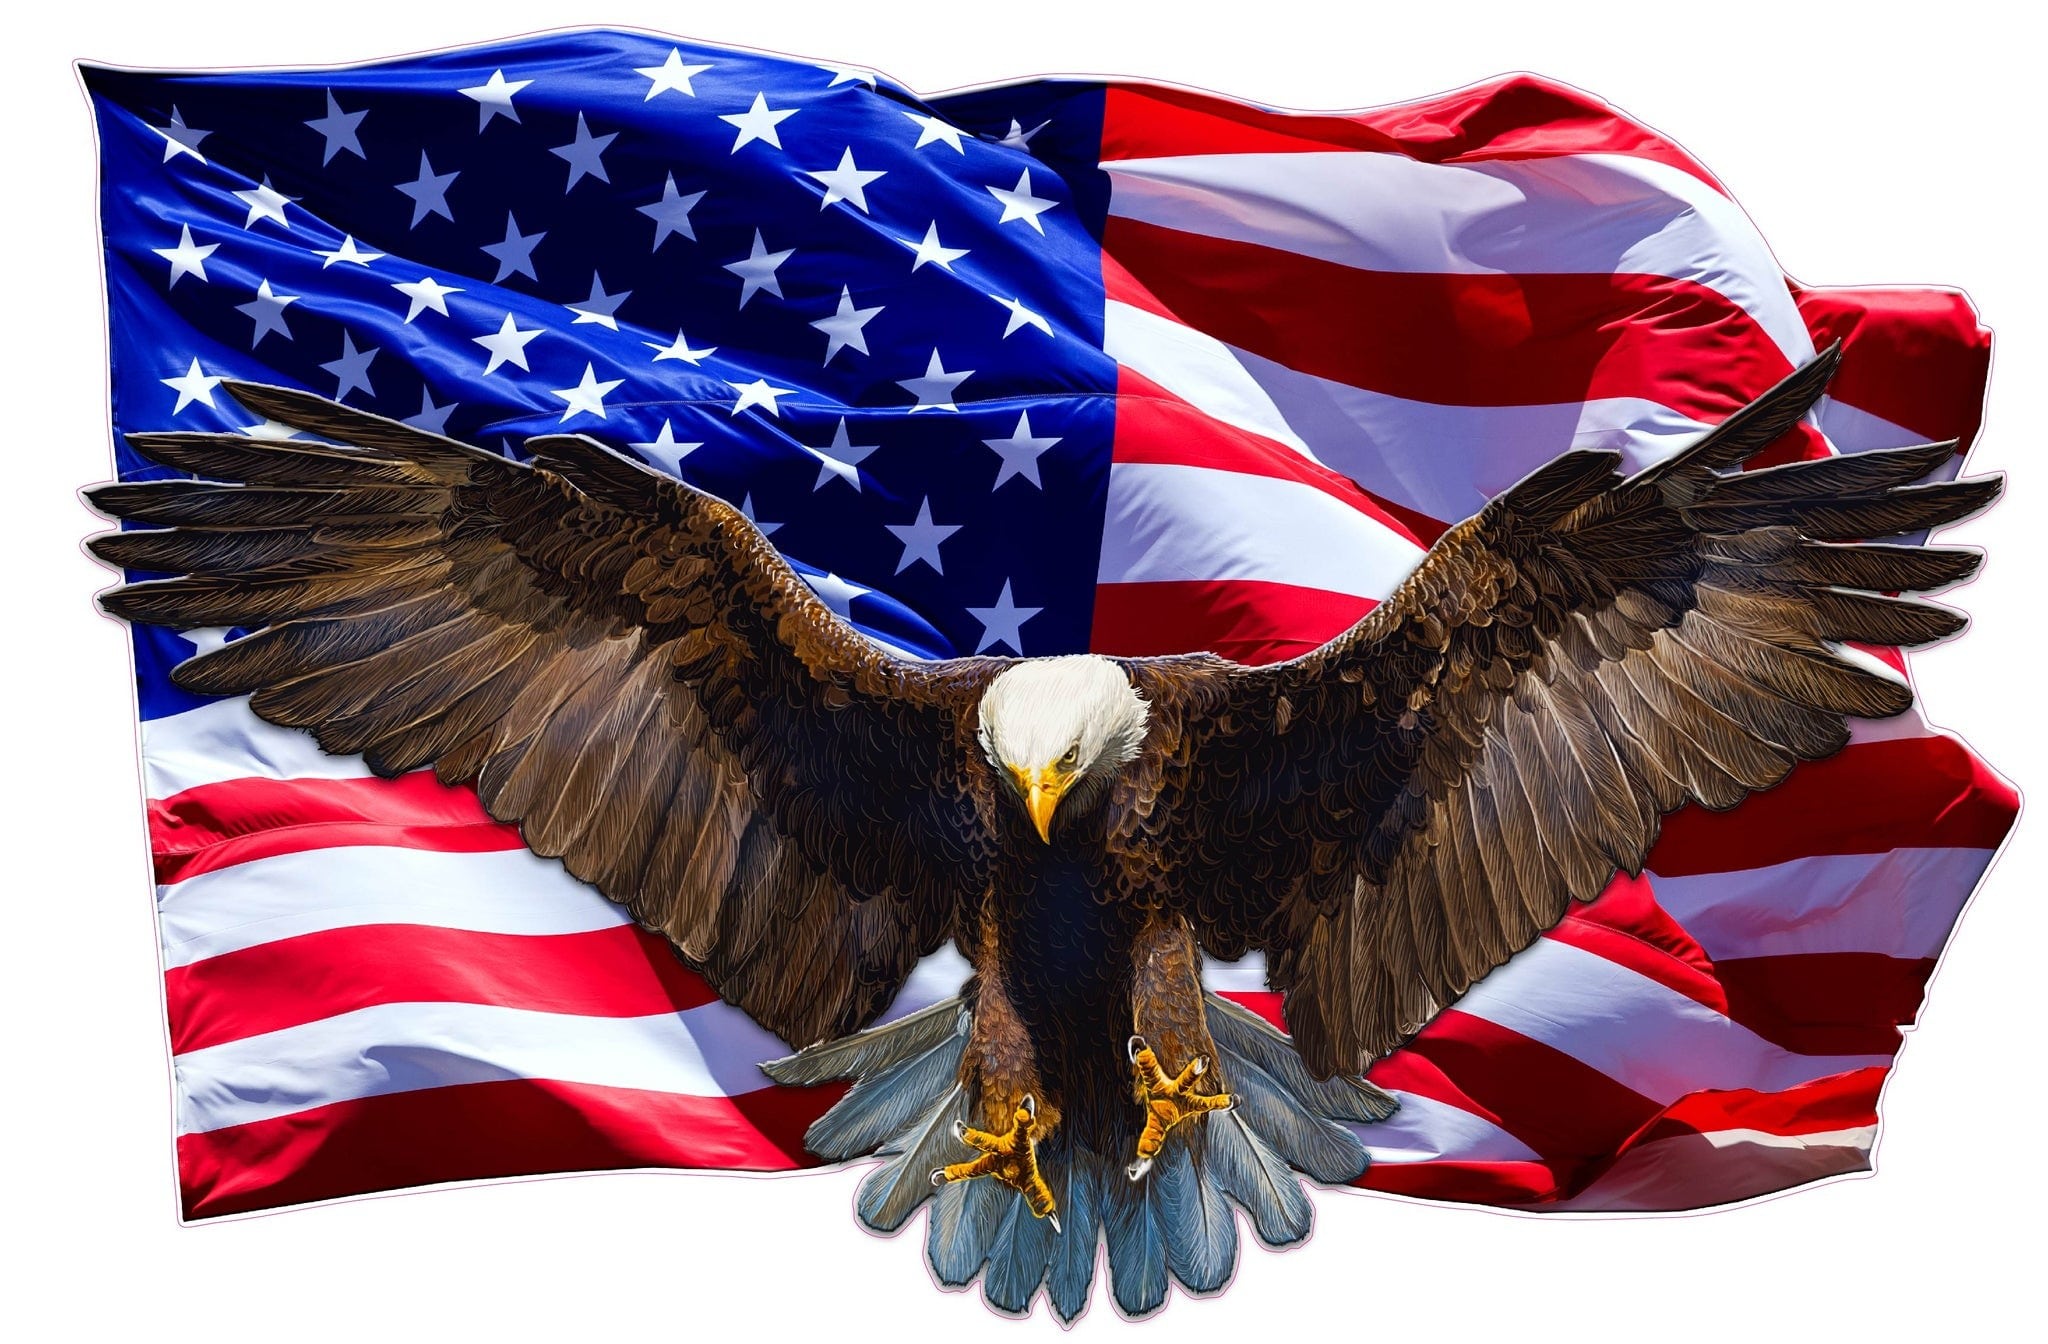 soaring_bald_eagle_american_flag_1024x1024@2x-1179992740.jpeg